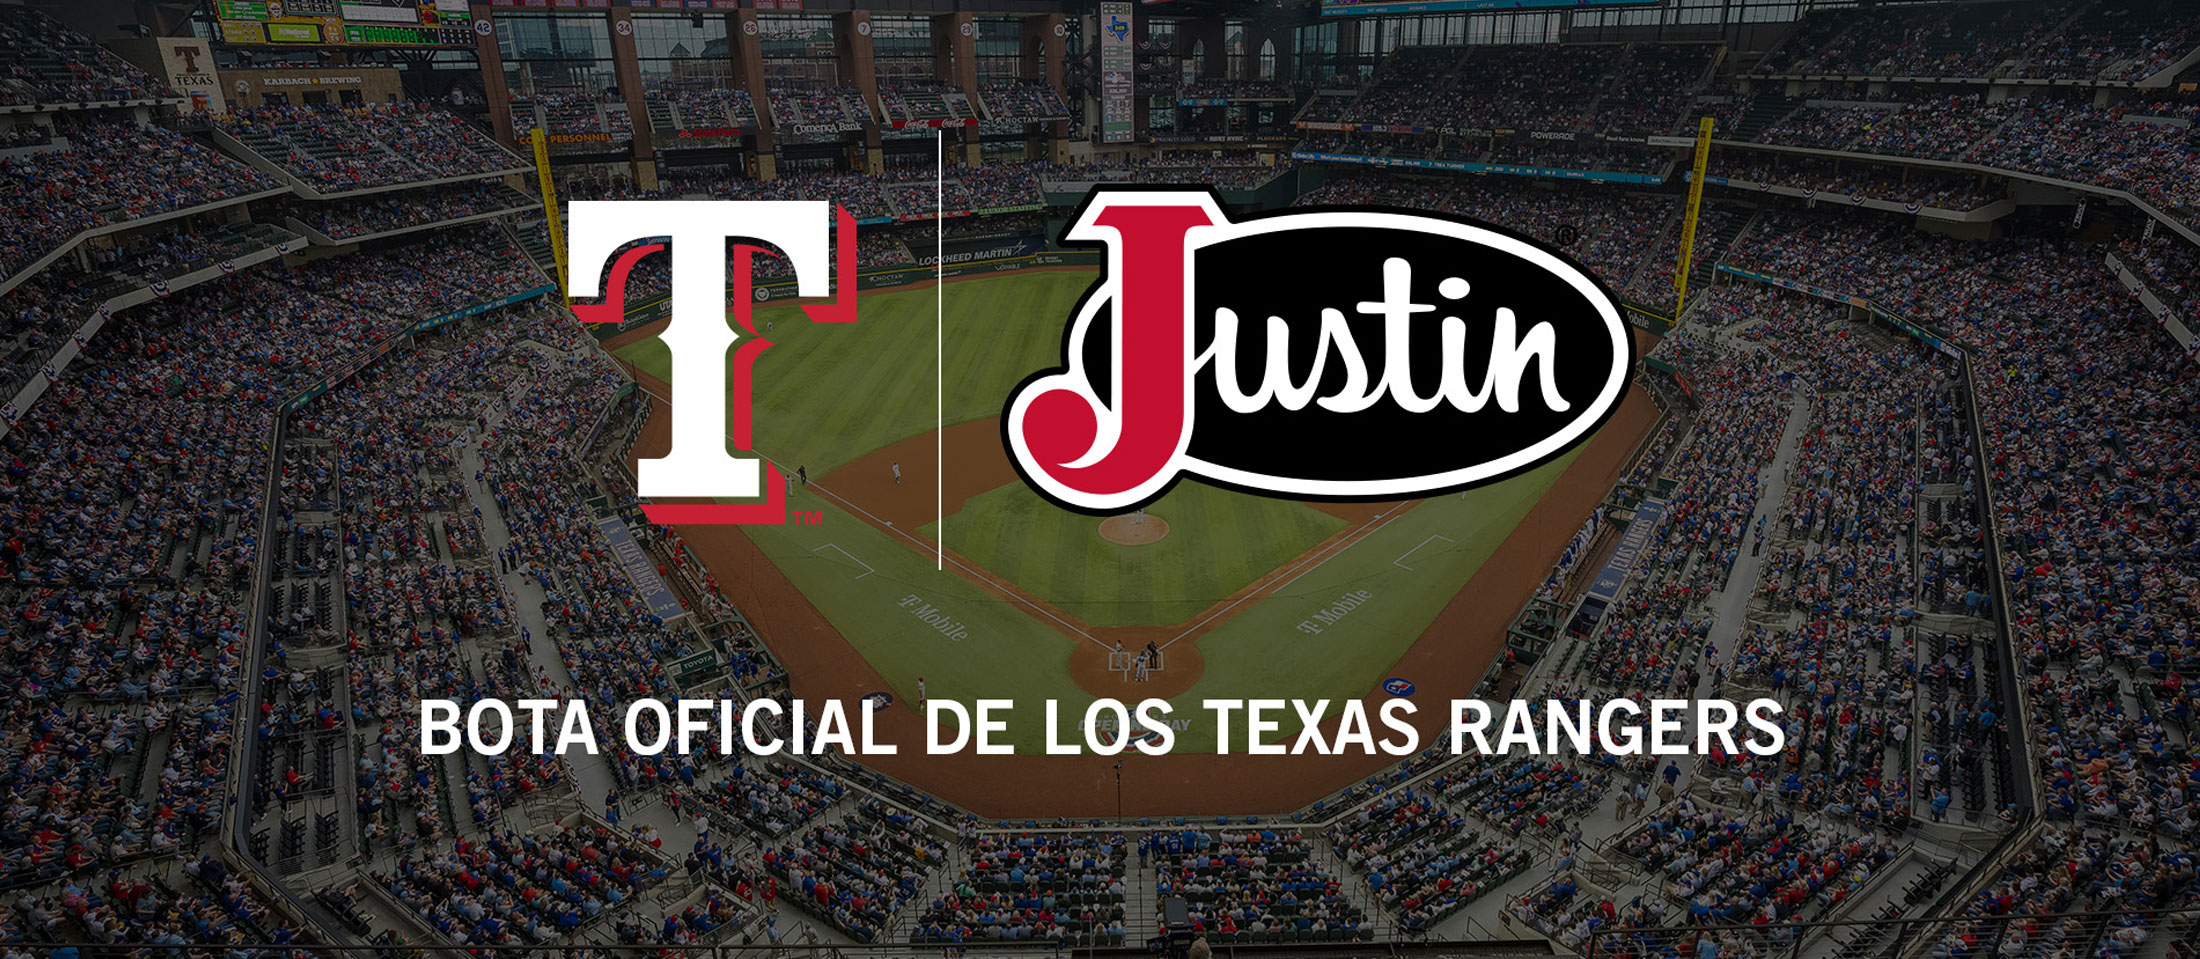 Bota oficial de los Texas Rangers. Un logotipo cerrado del logotipo de Justin y el logotipo de los Texas Rangers con las palabras "Botas oficiales de los Texas Rangers" con una imagen de Globe Life Field de fondo.